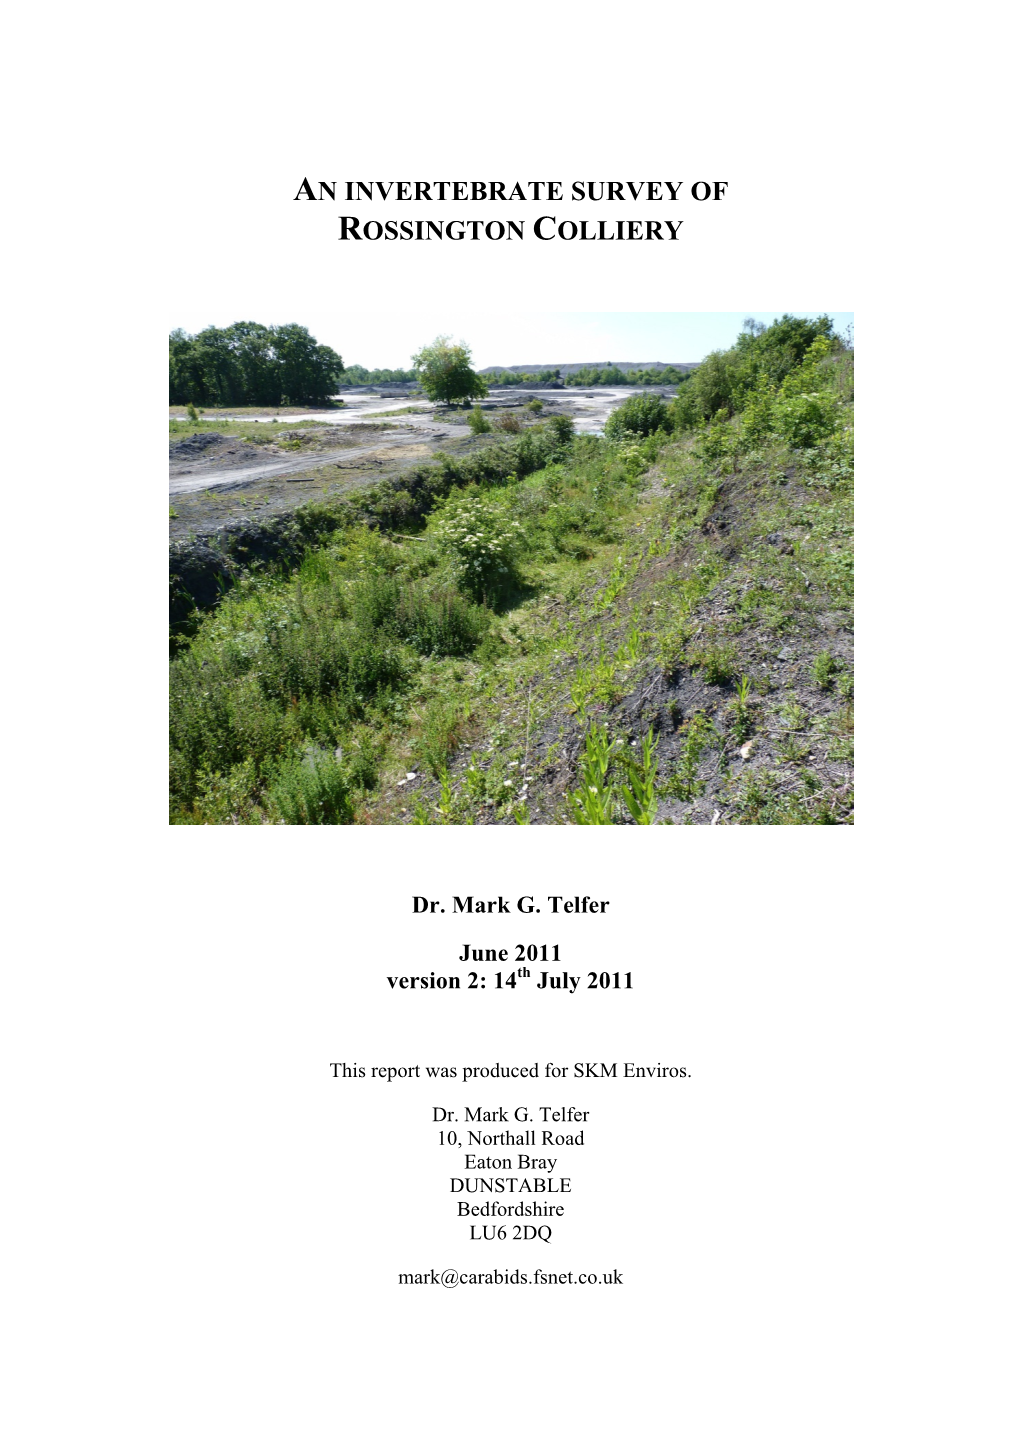 An Invertebrate Survey of Rossington Colliery